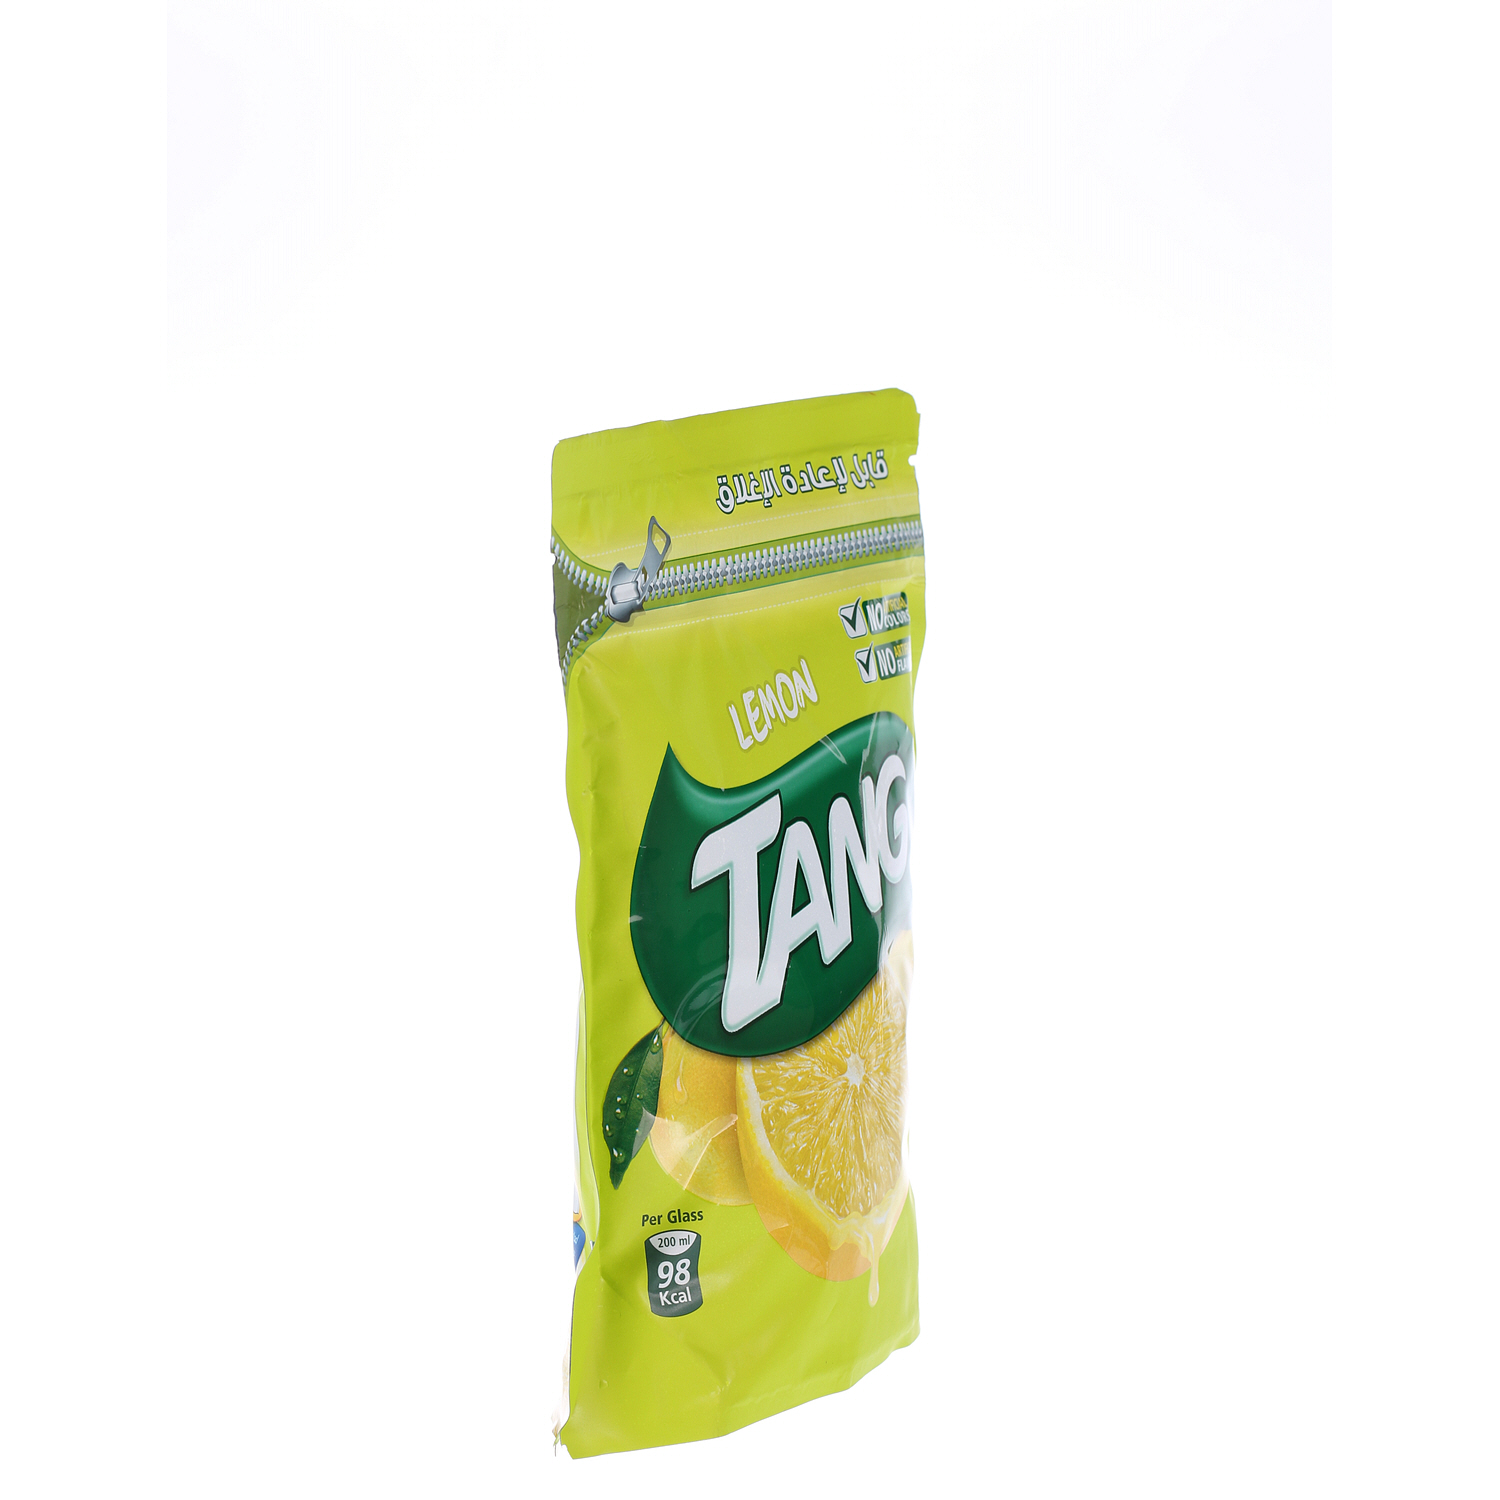 Tang Instant Drink Lemon Poch 500gm